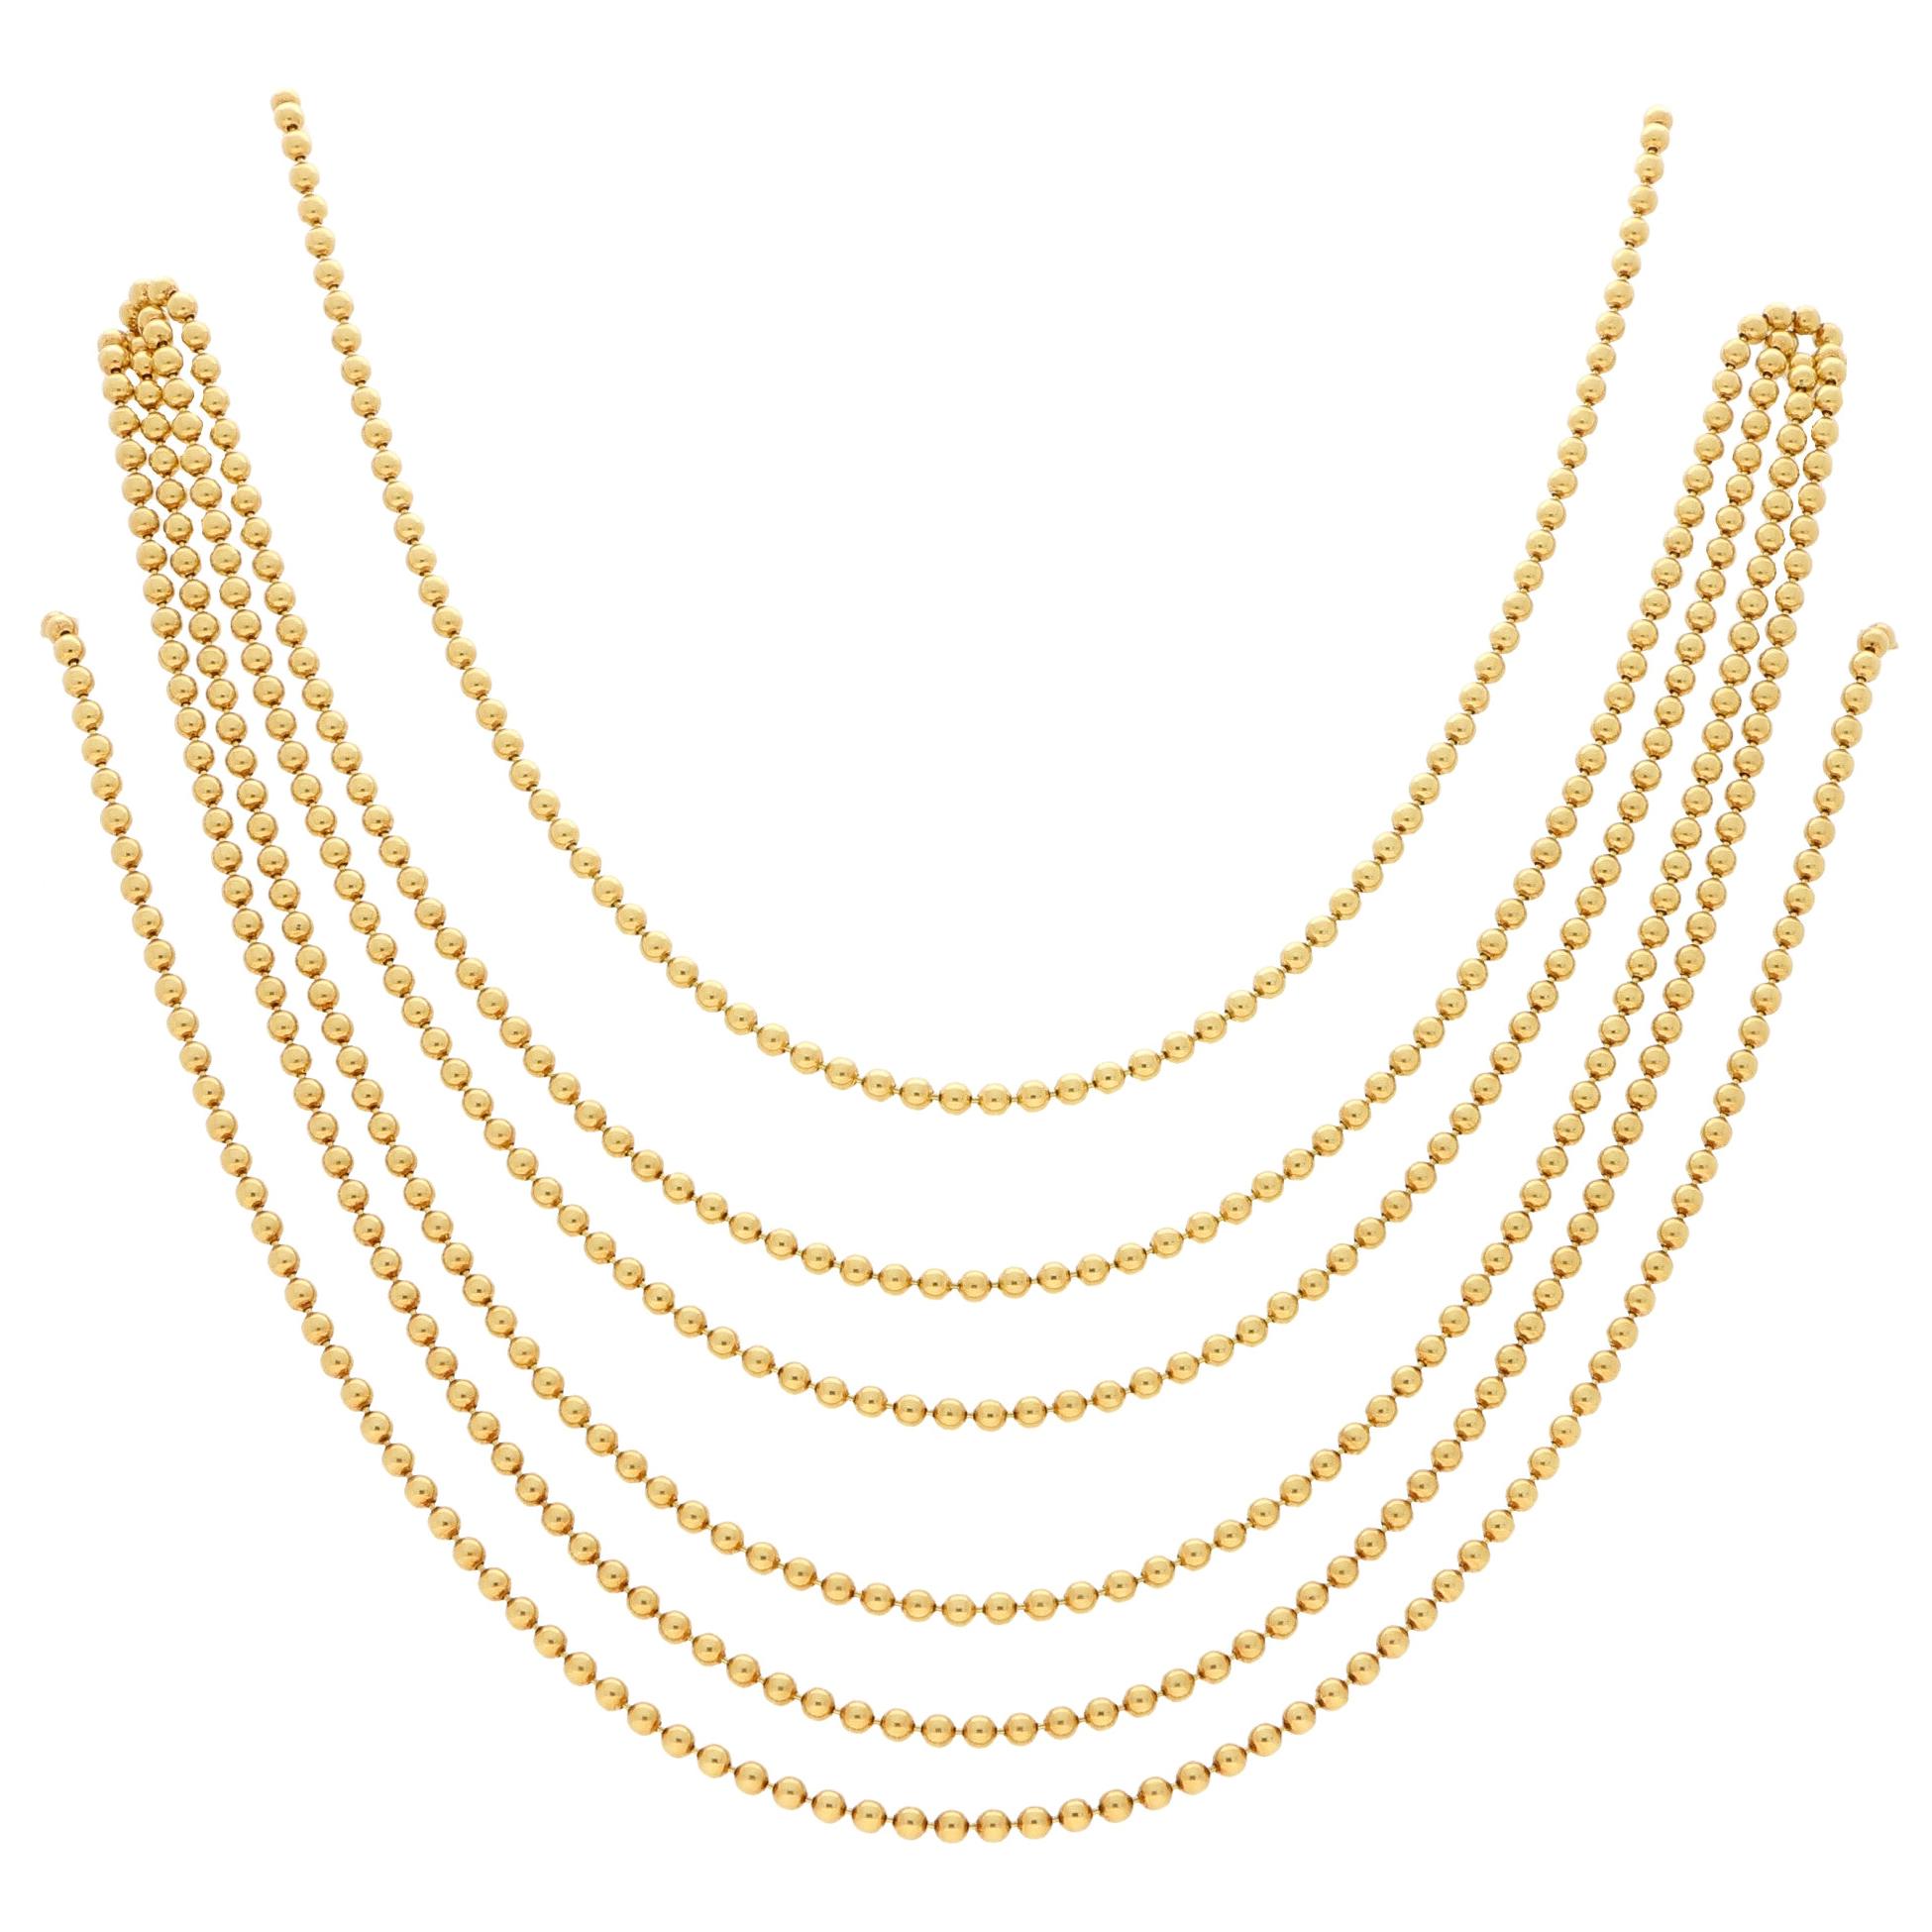 Cartier Six Strand Draperie Necklace Set in 18 Karat Yellow Gold